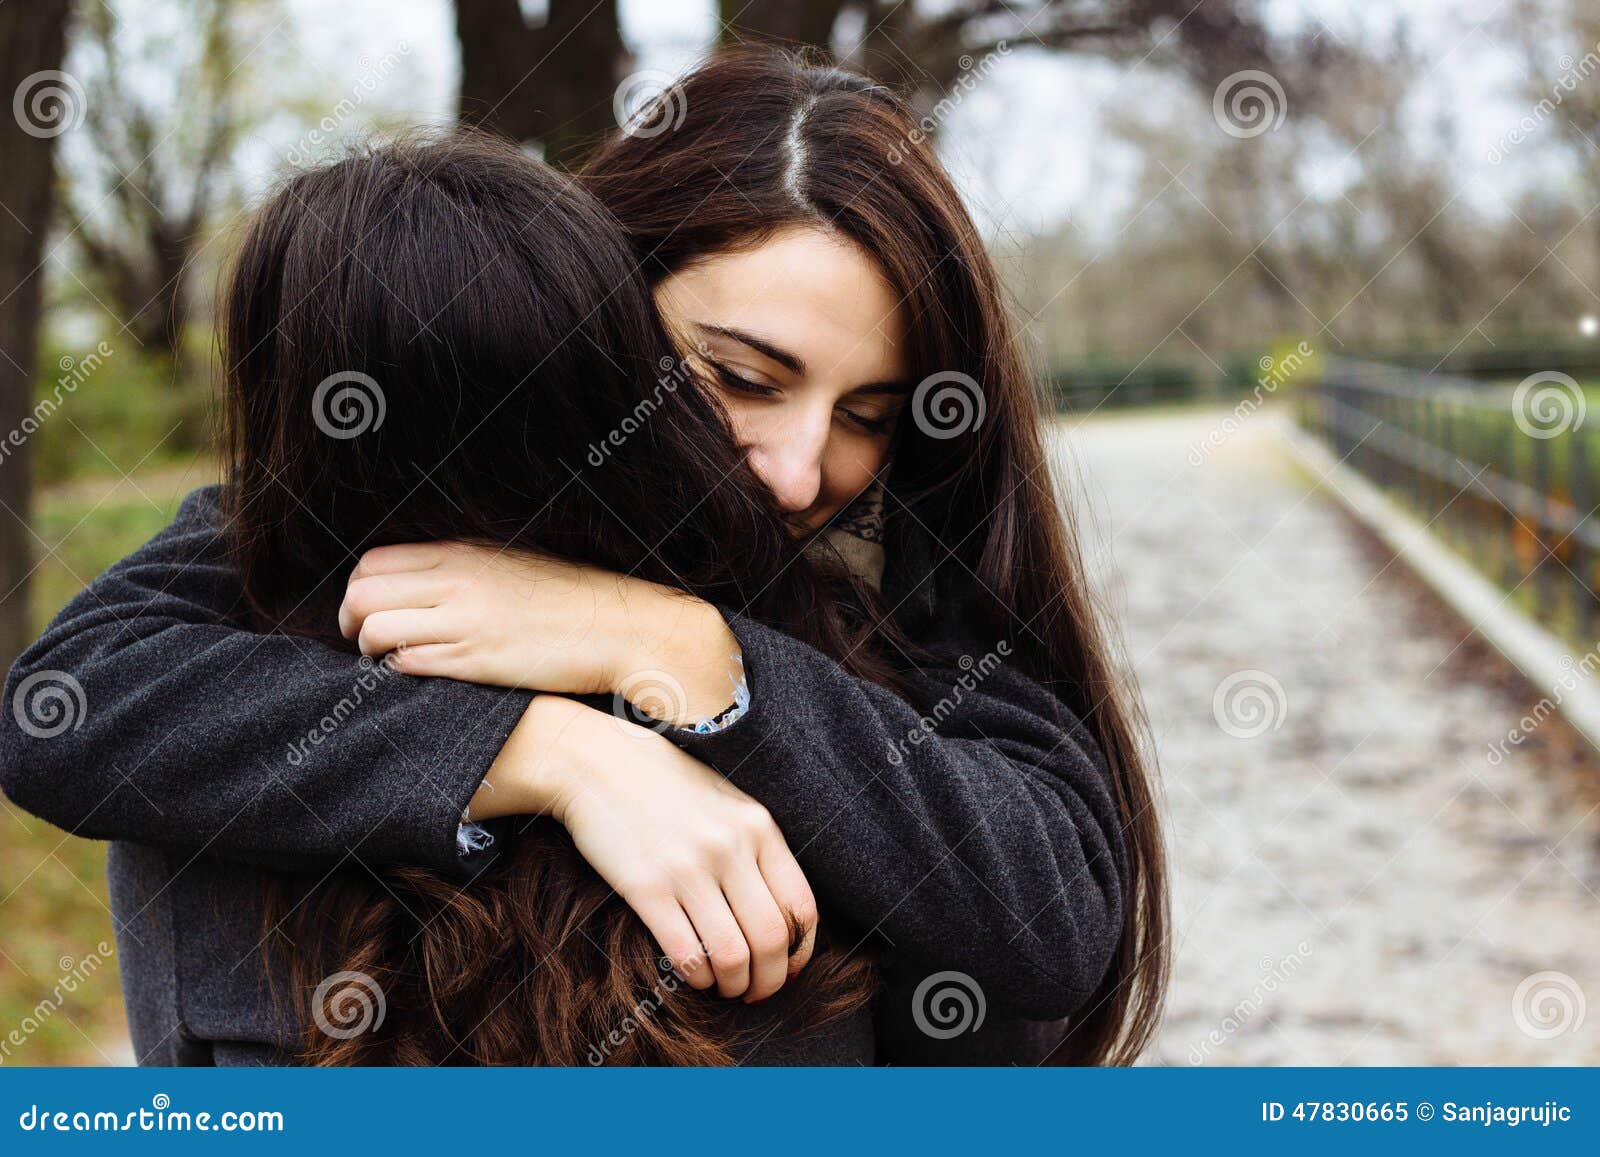 Girl Hugging Her Best Friend Stock Image - Image of friendship ...